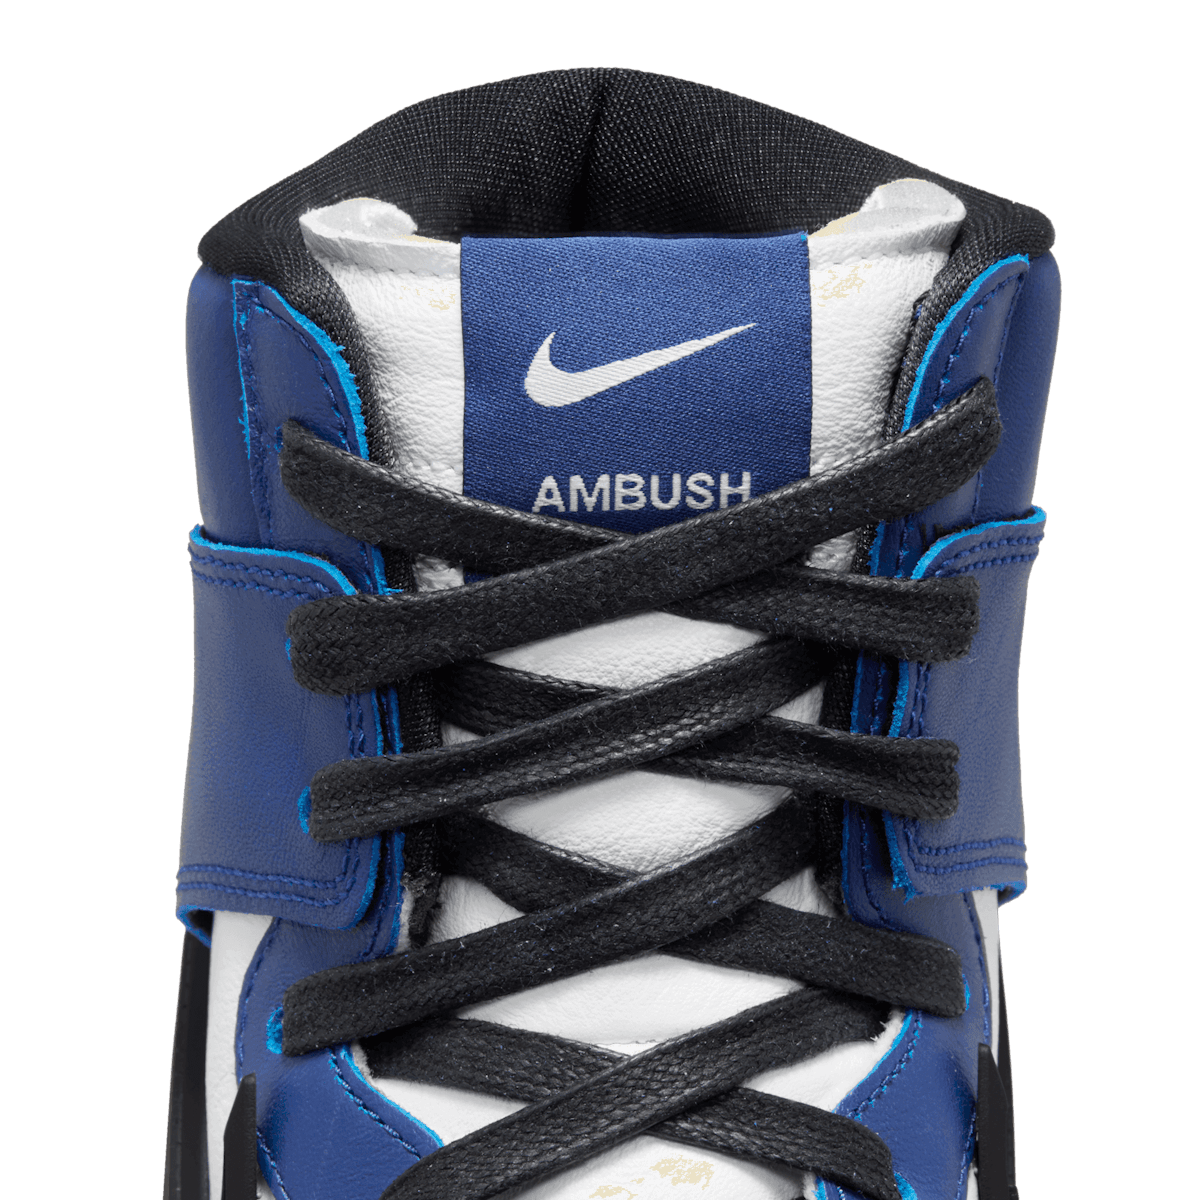 Nike Dunk High Ambush Deep Royal Blue - CU7544-400 Raffles and